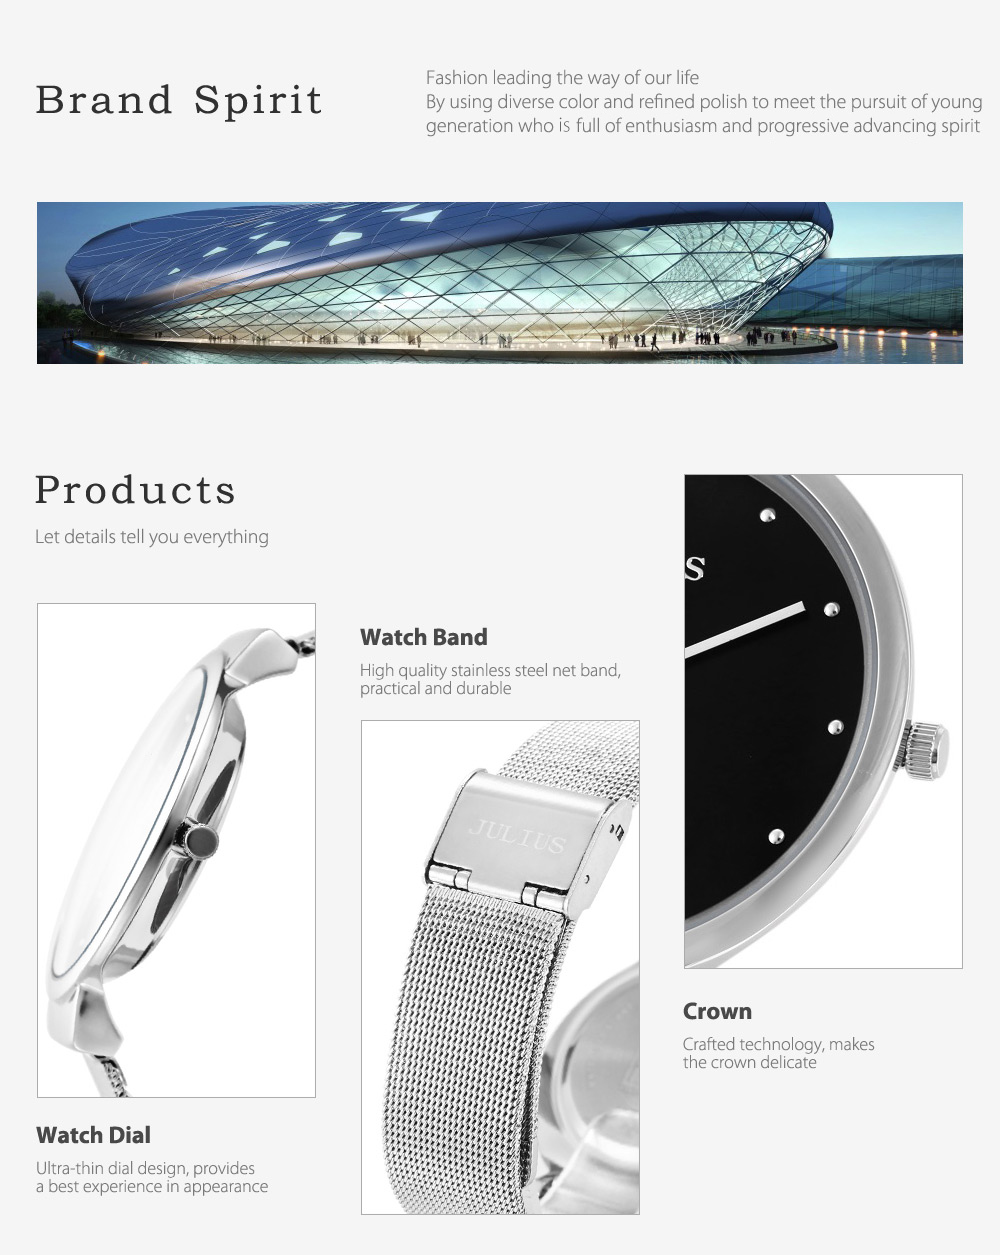 Julius JA - 426M Male Ultrathin Stainless Steel Mesh Band Quartz Wrist Watch